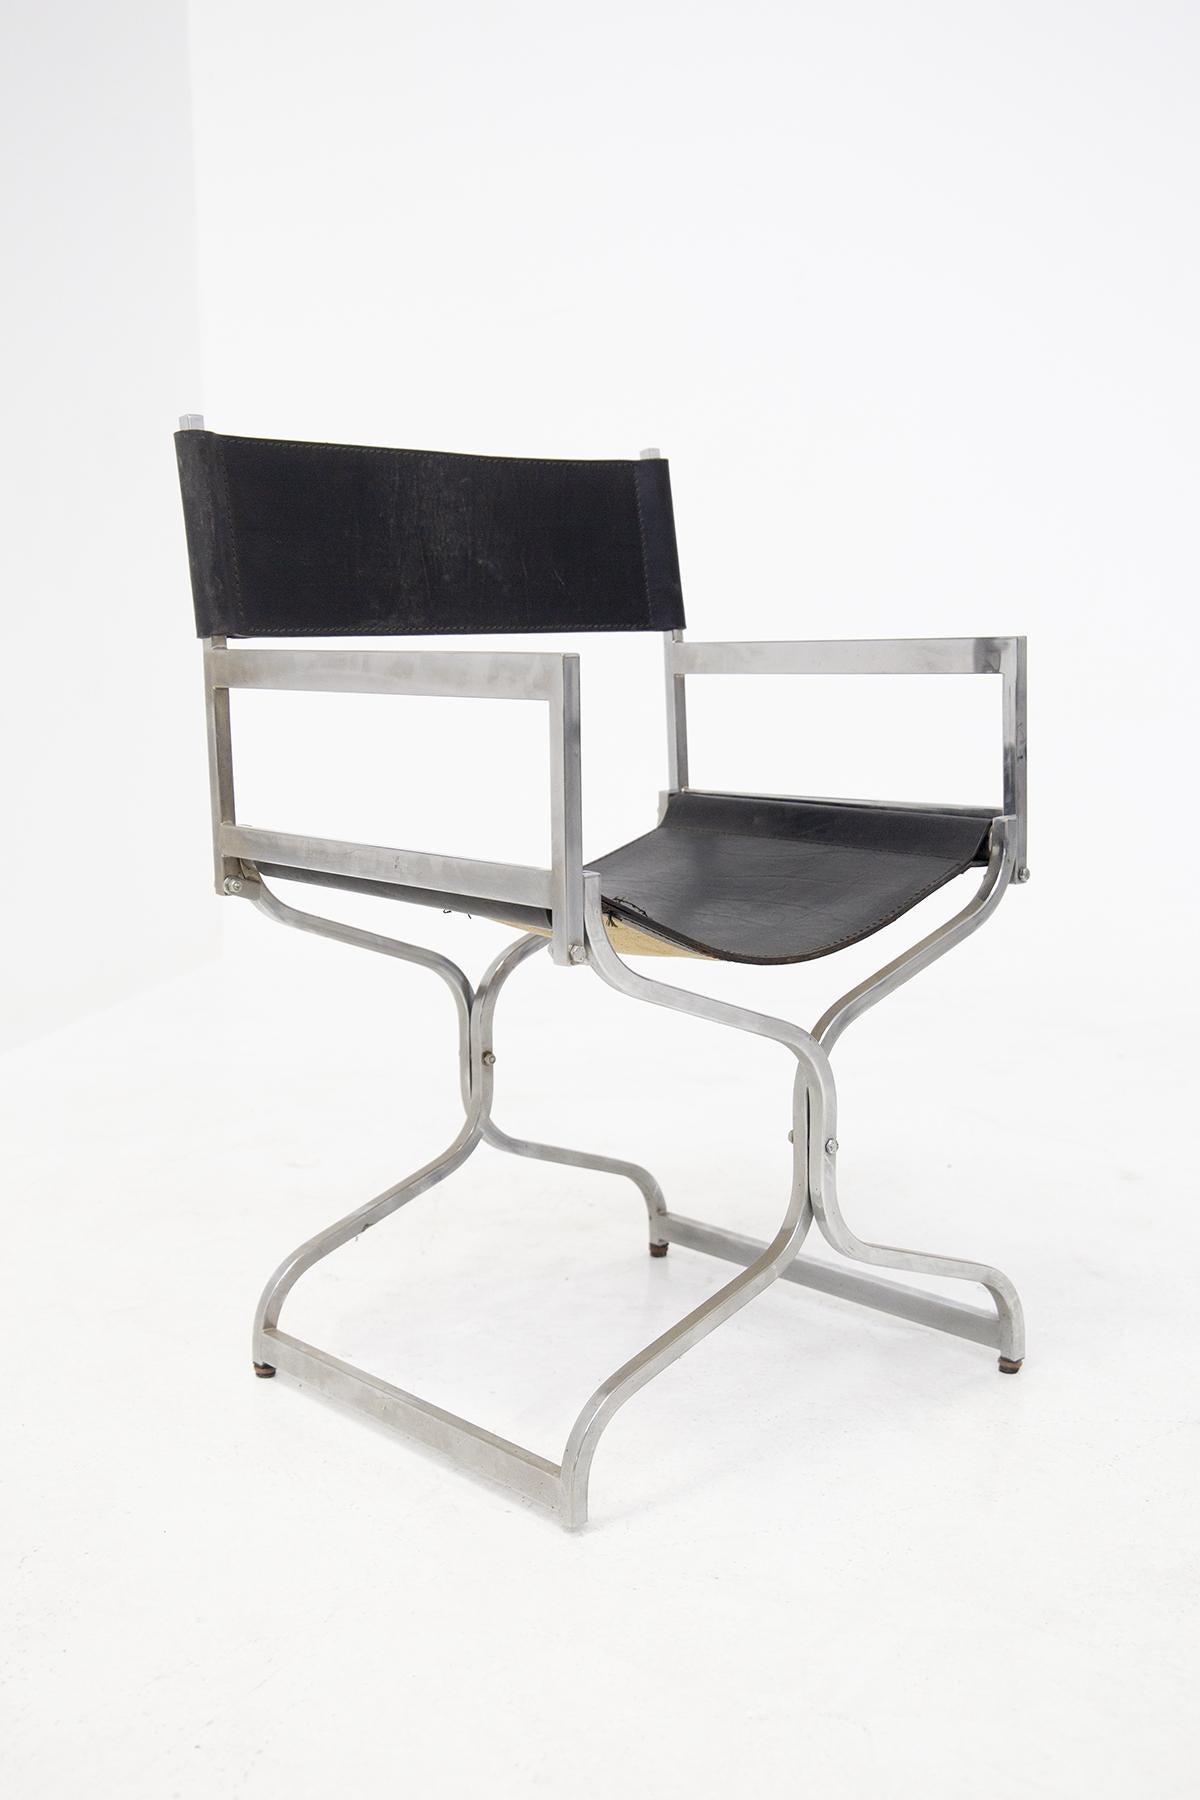 Luigi Caccia Dominioni Vintage Folding Chairs for Vips Residence Milano 3